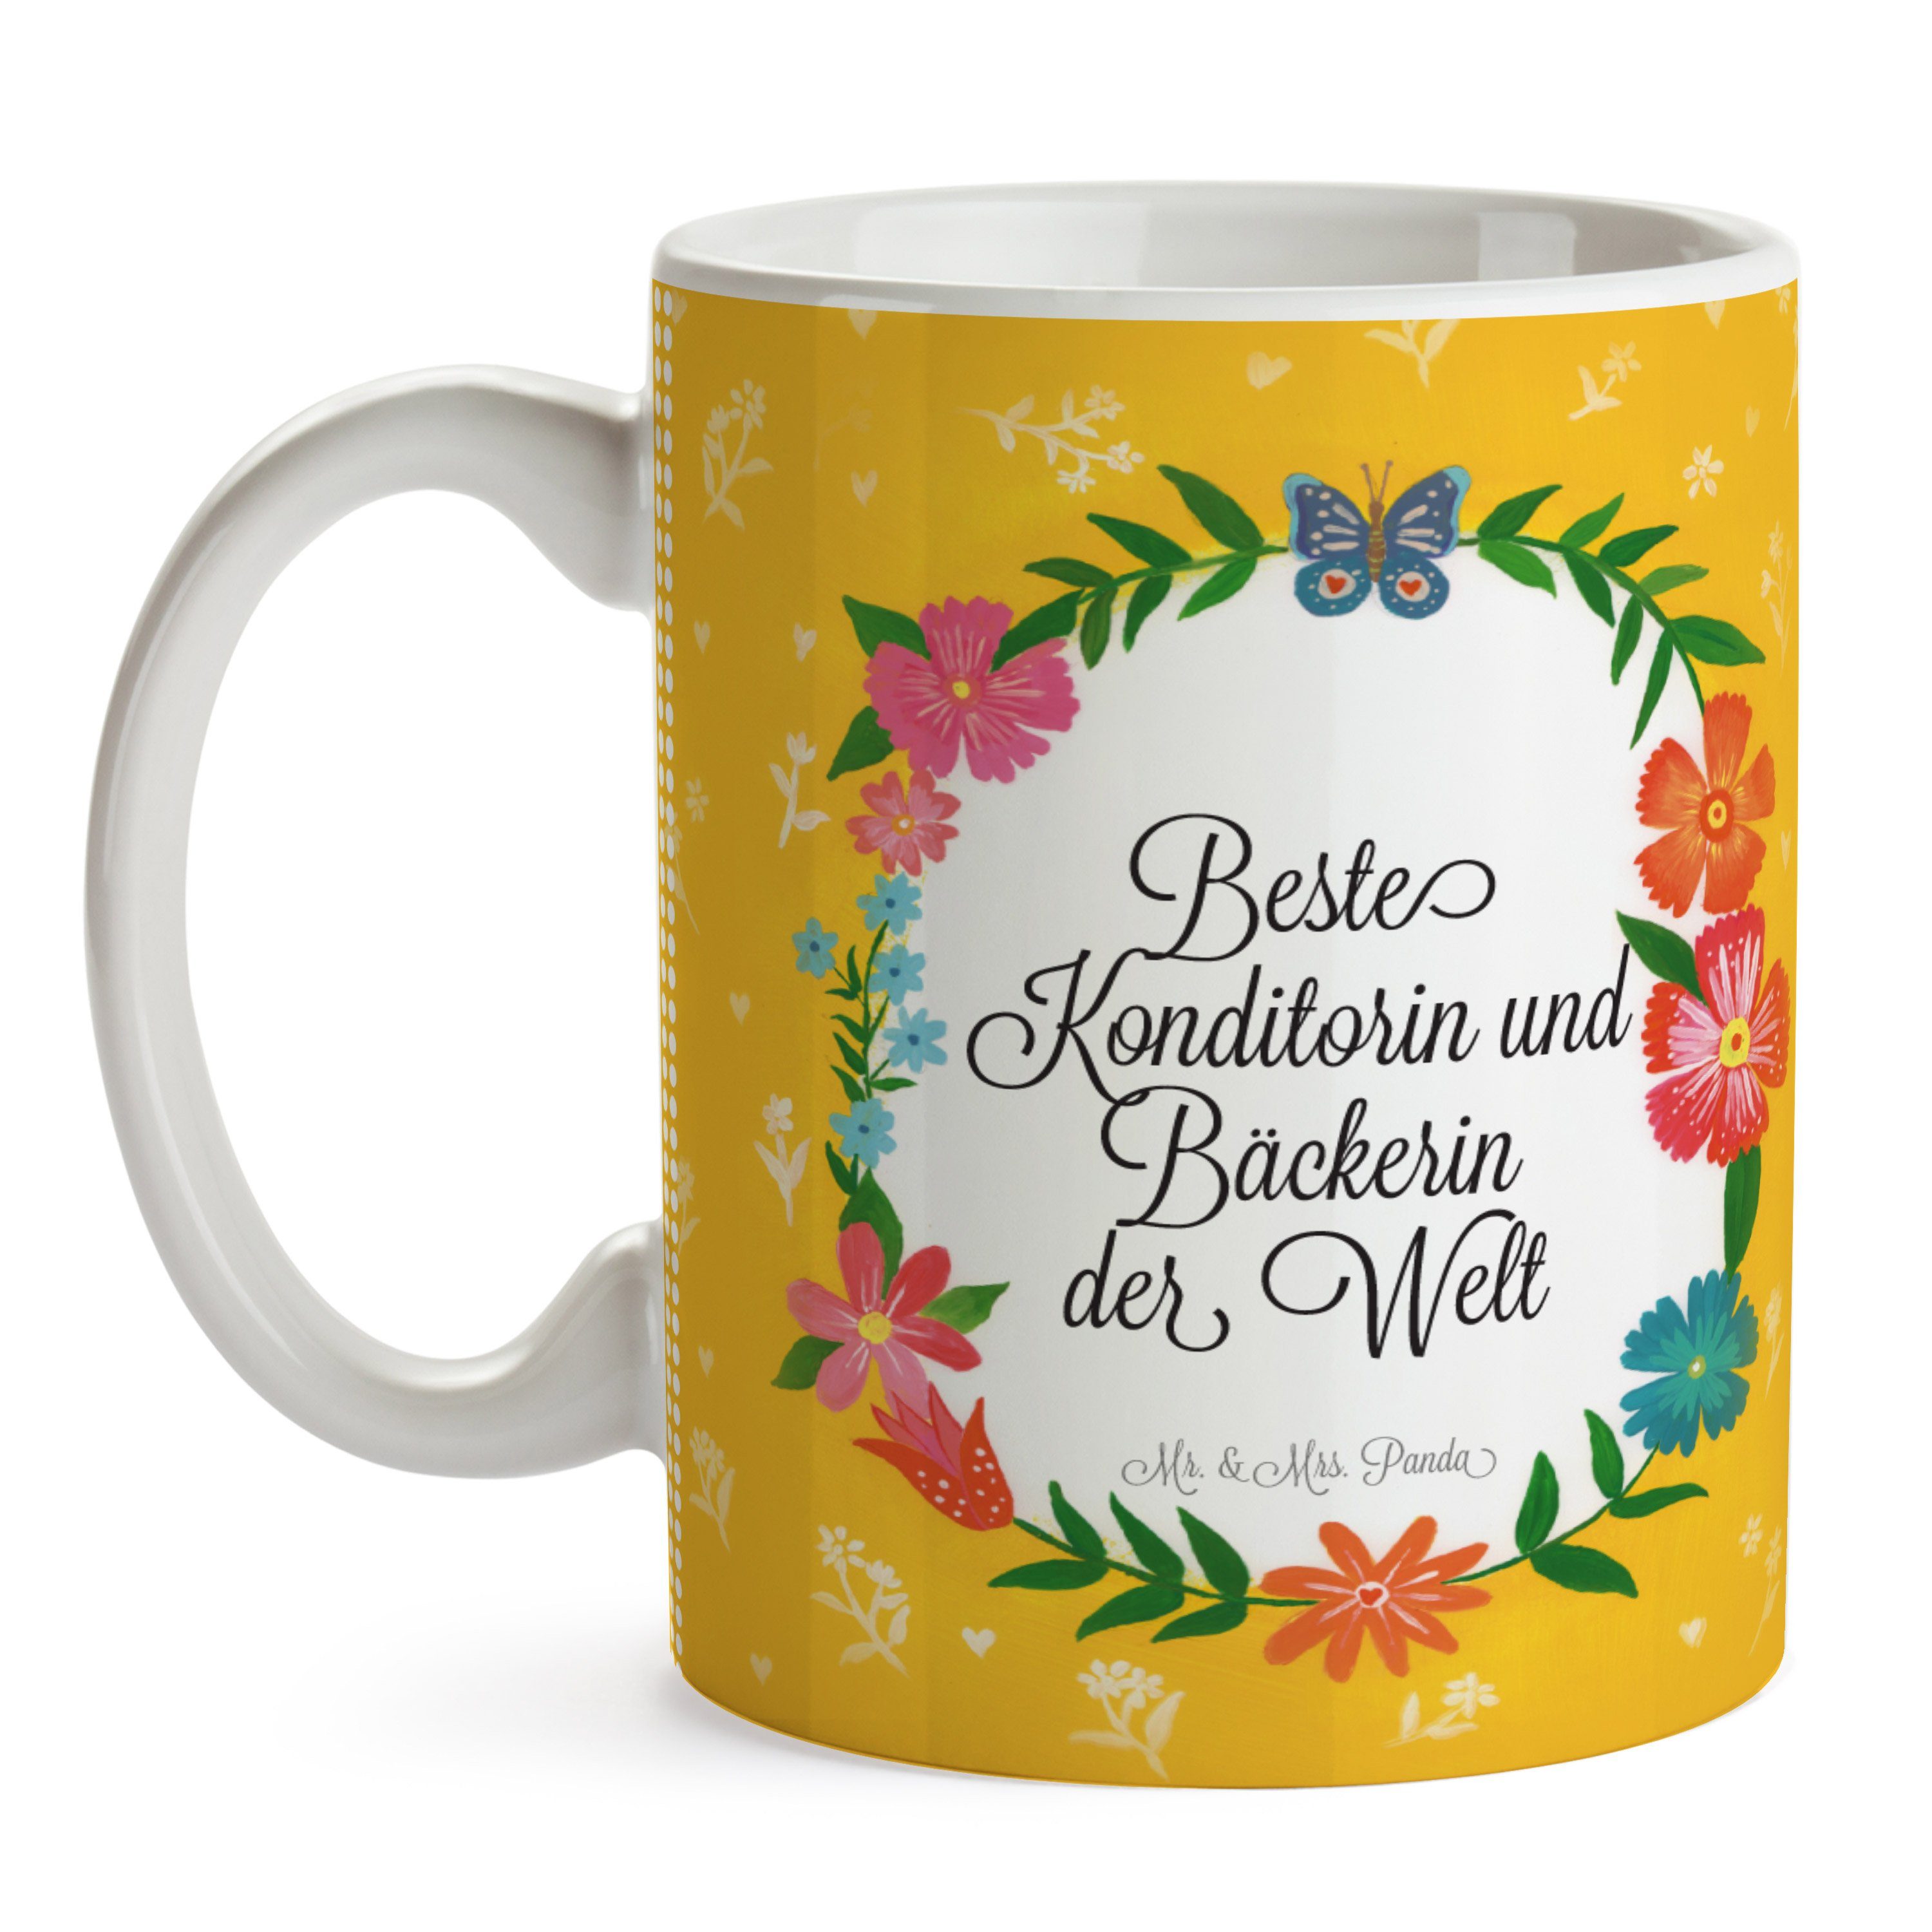 Mr. & Mrs. Panda Tasse - Keramik Tasse, Konditorin Kaffeetasse, Studium, Büro und Geschenk, Bäckerin